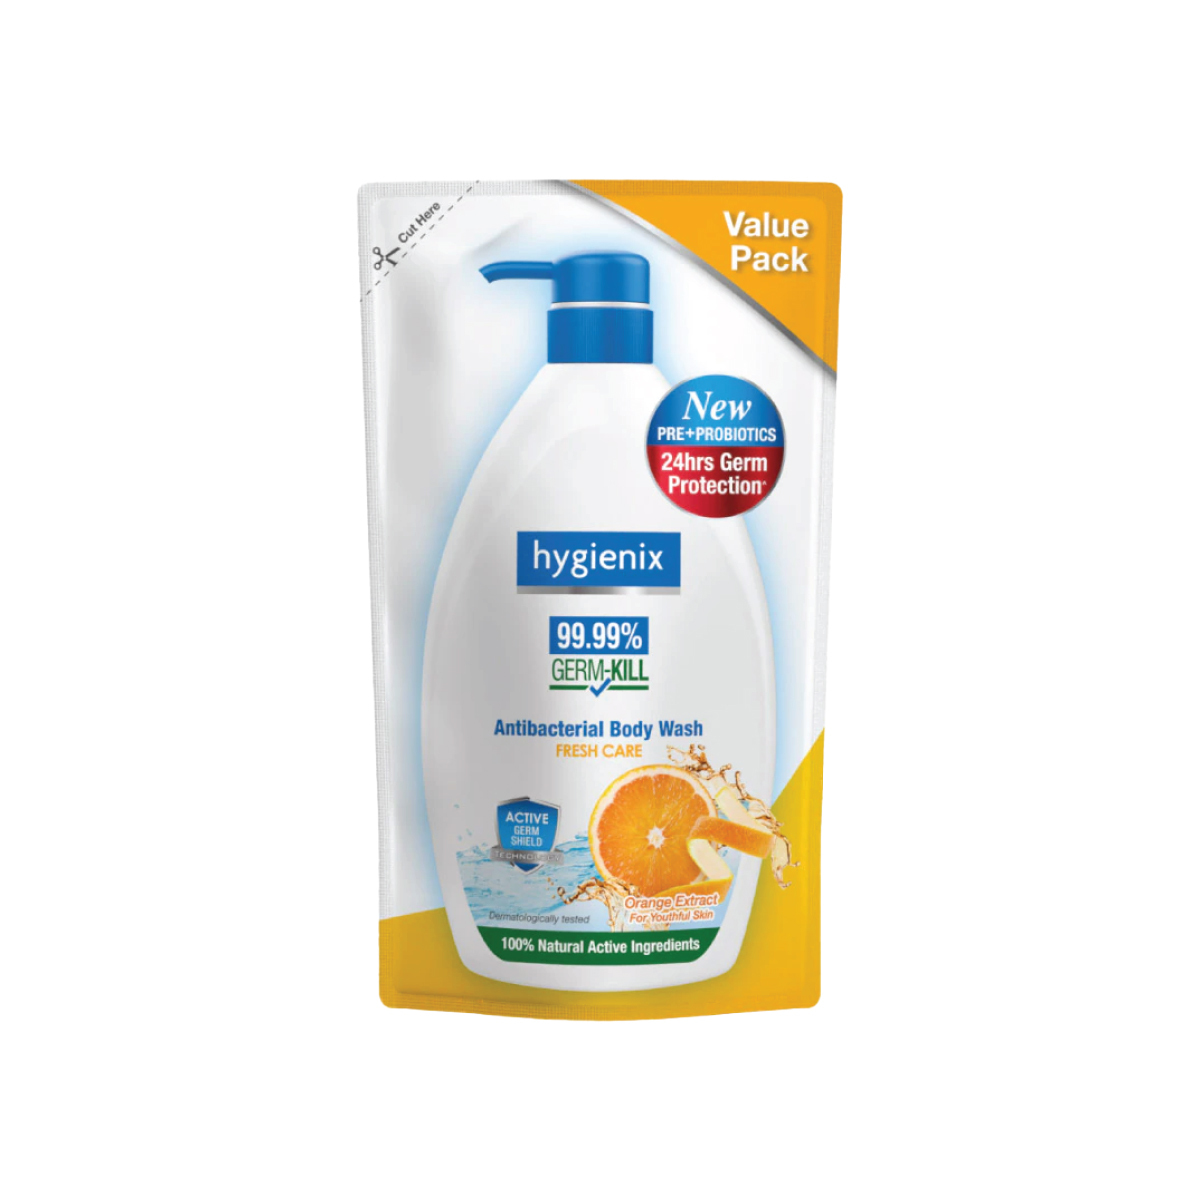 Hygienix Anti Bacterial Body Wash Fresh Care 850g